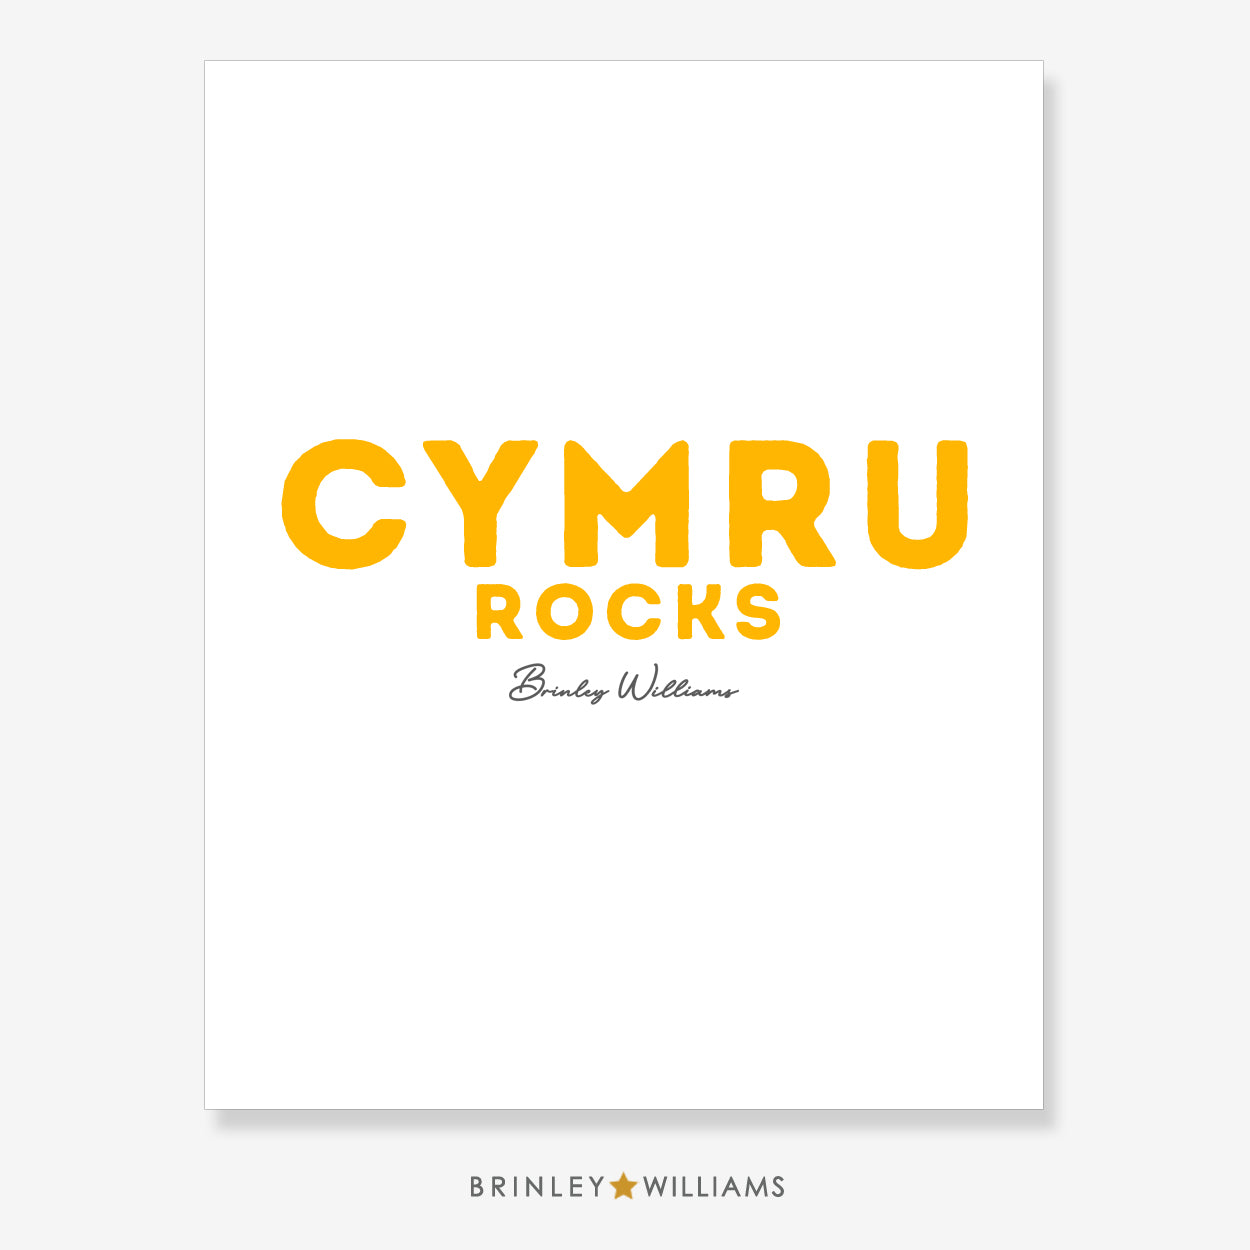 Cymru Rocks Wall Art Poster - Yellow